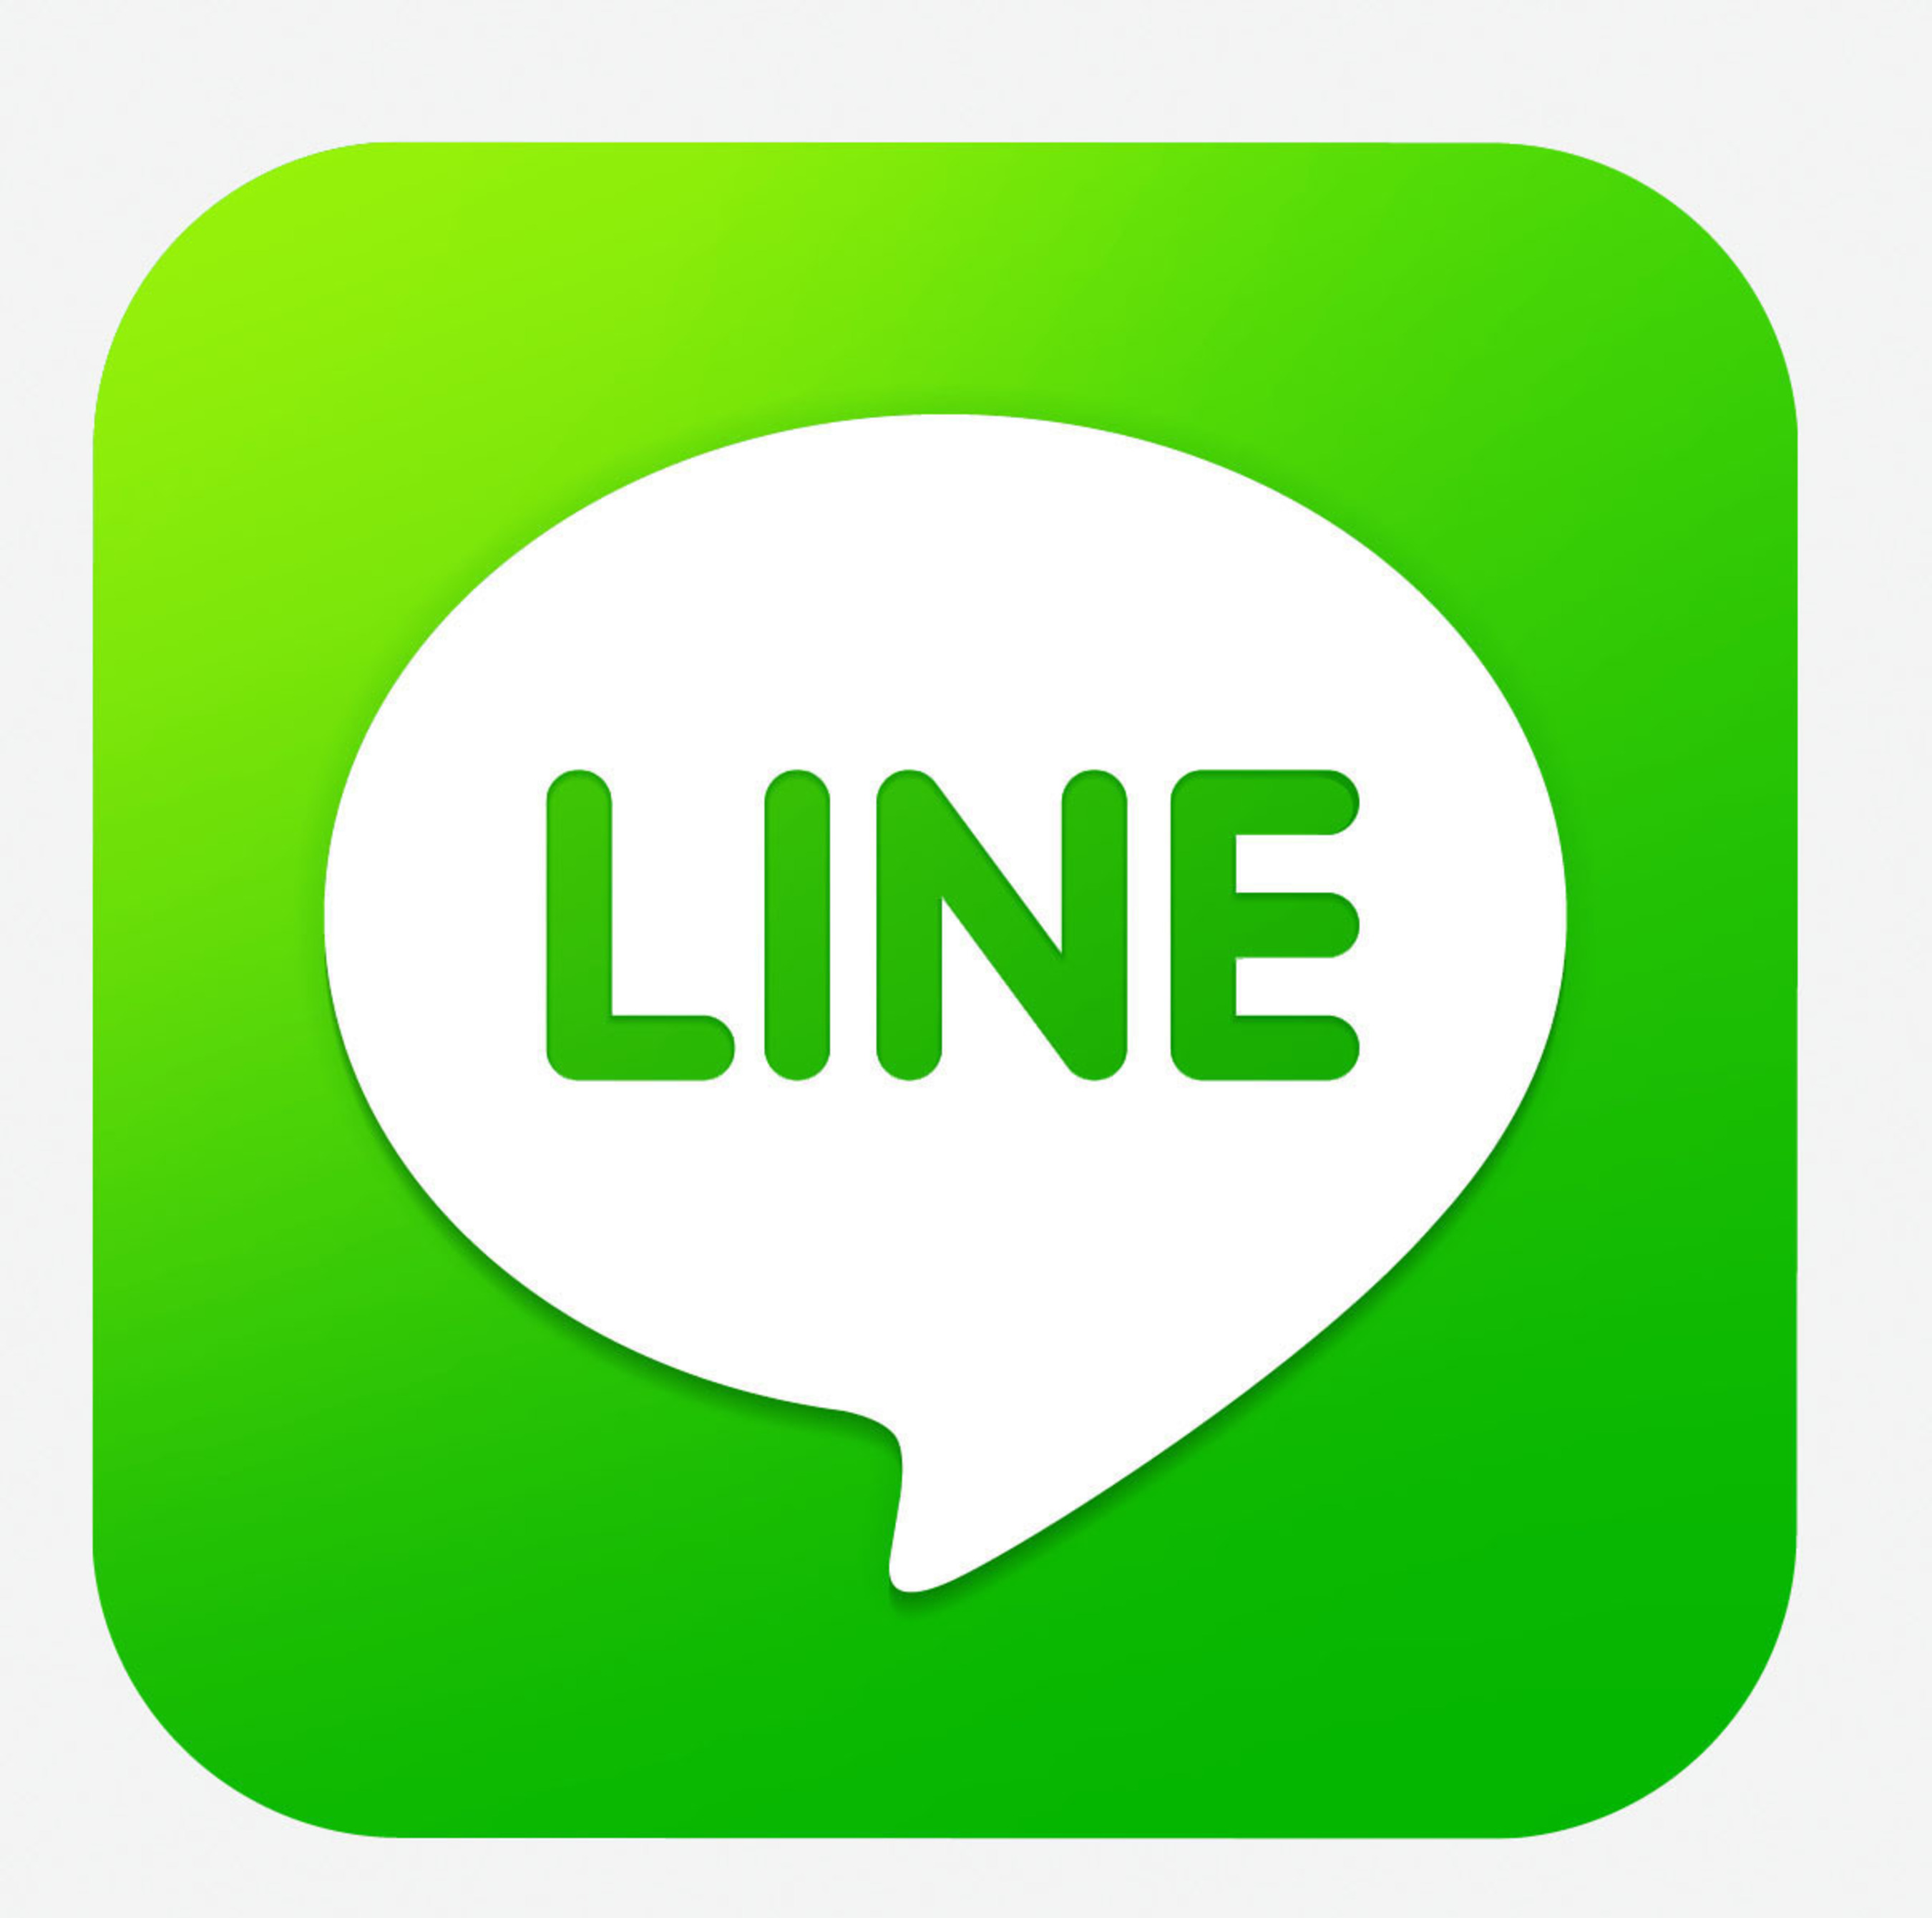 LINE logo. (PRNewsFoto/LINE Corporation) (PRNewsFoto/LINE CORPORATION)